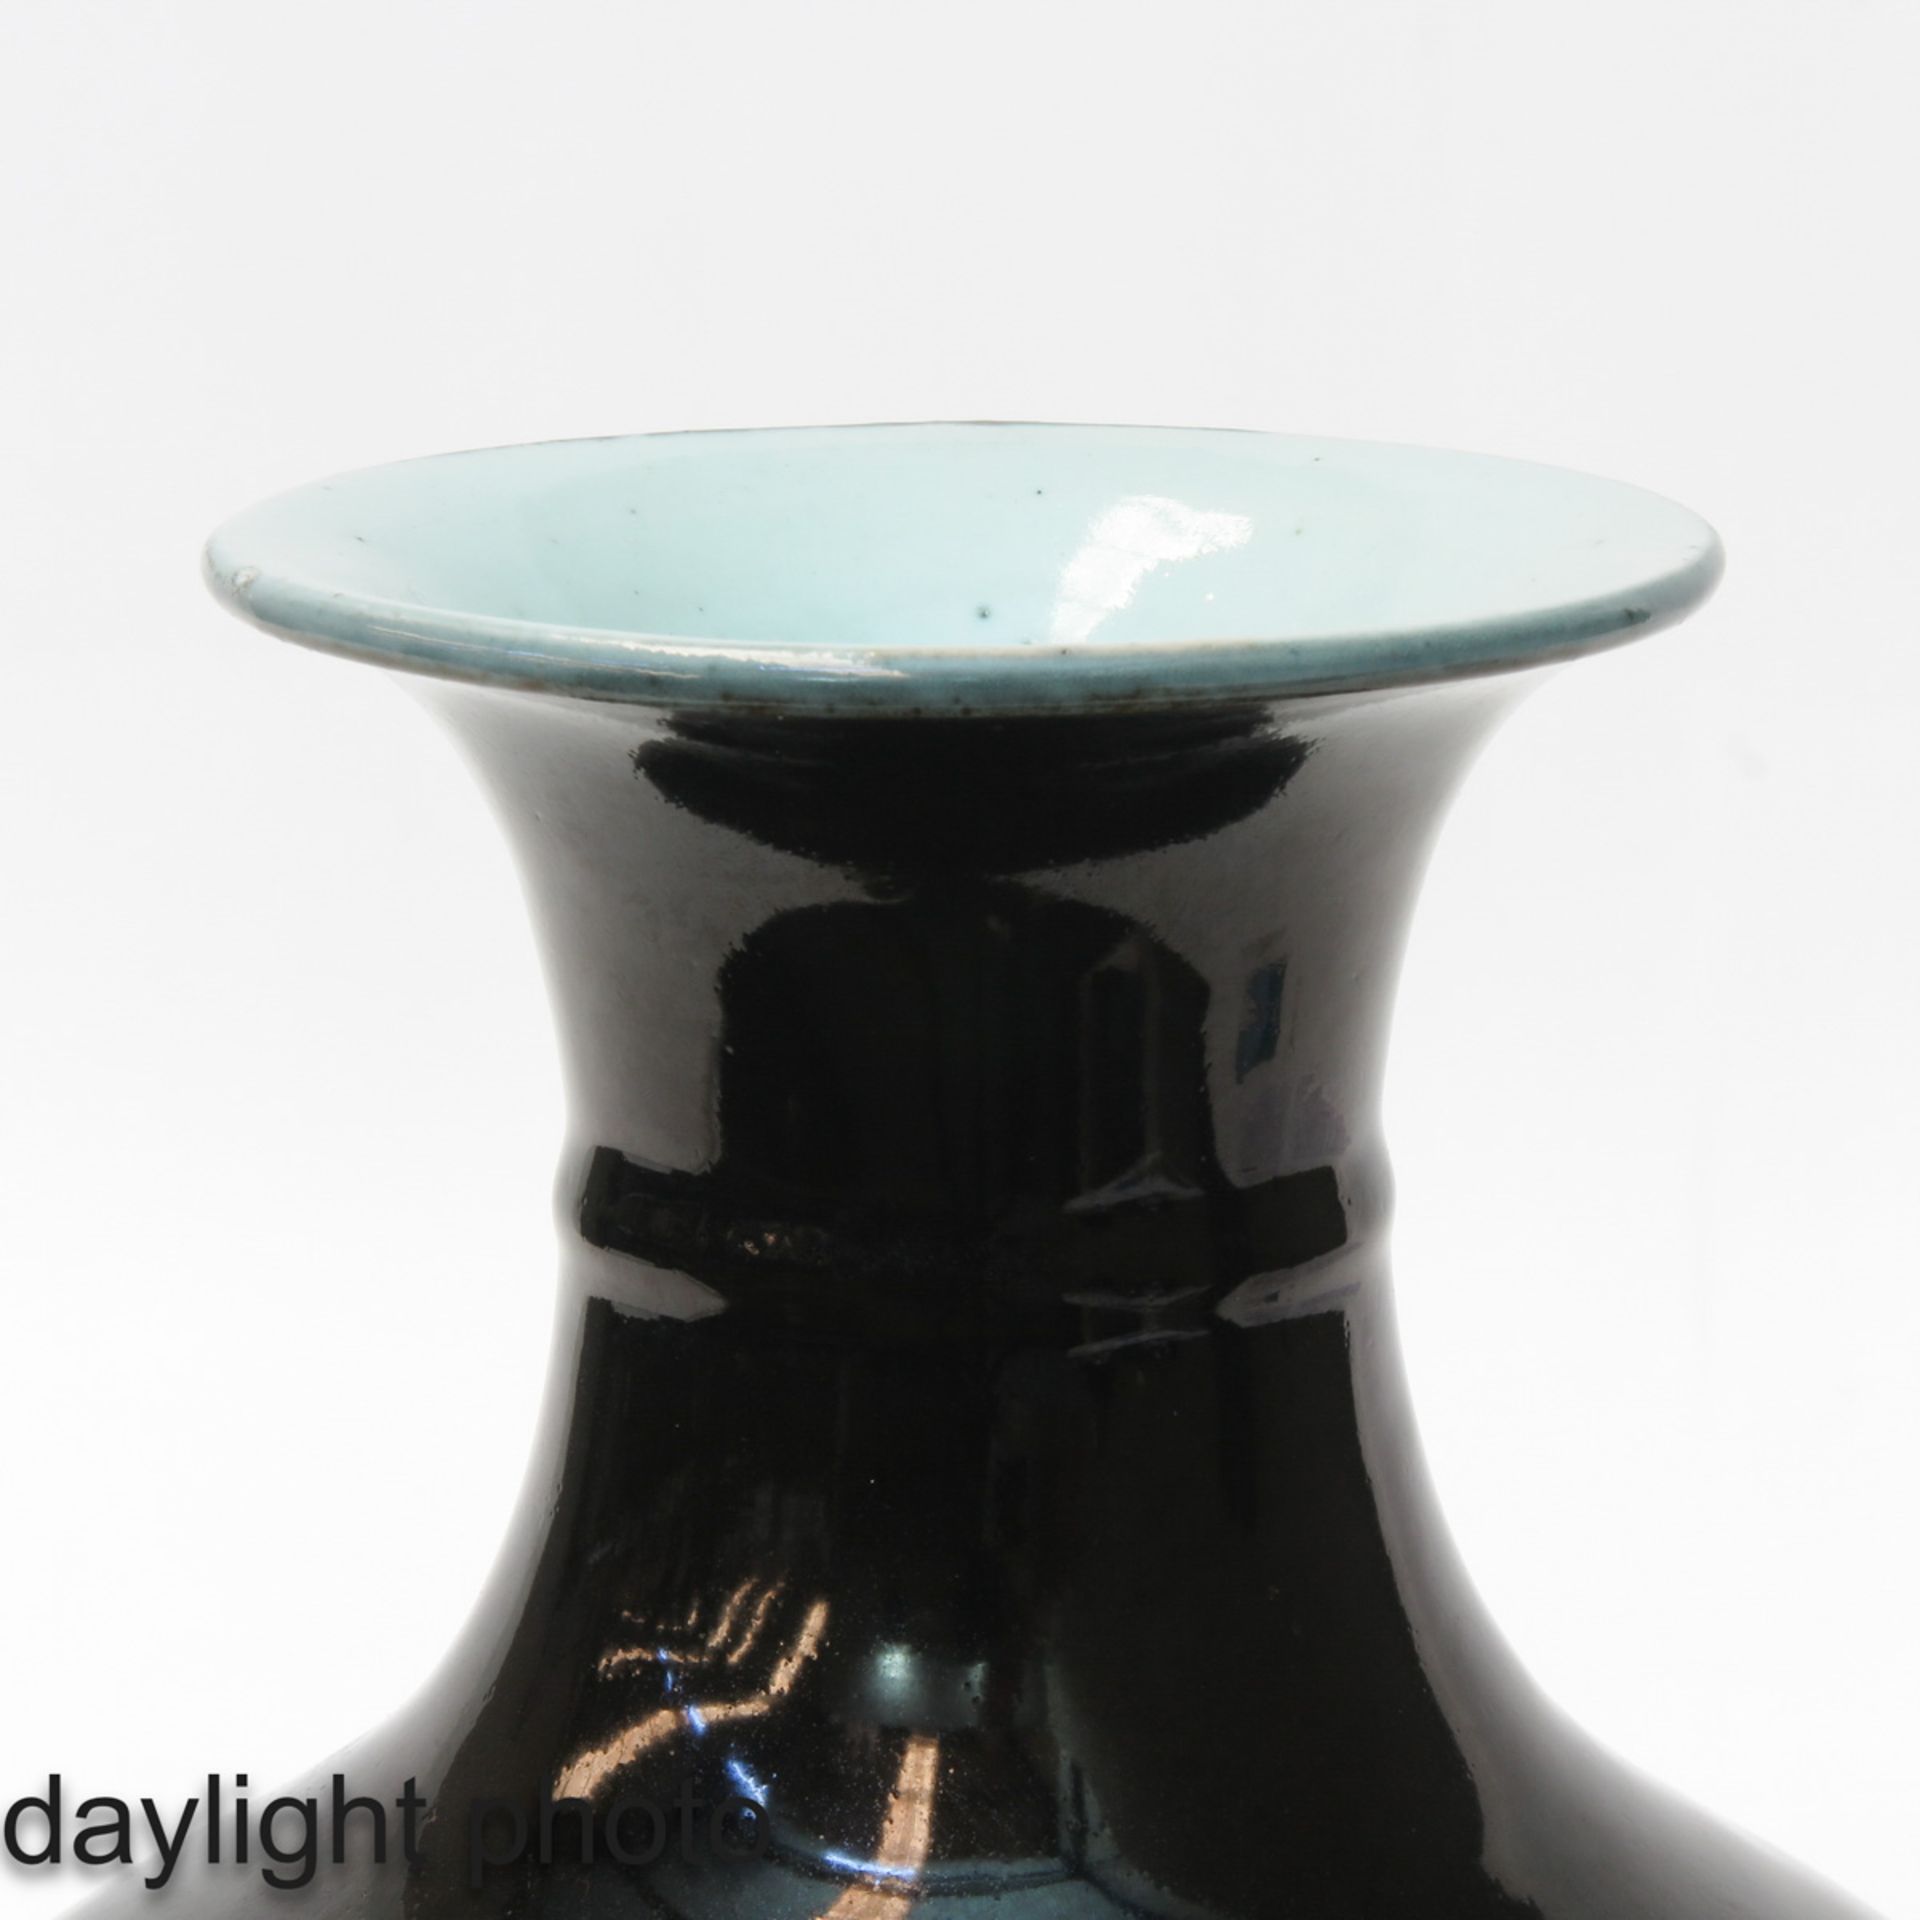 A Tea Dust Decor Baluster Vase - Image 9 of 9